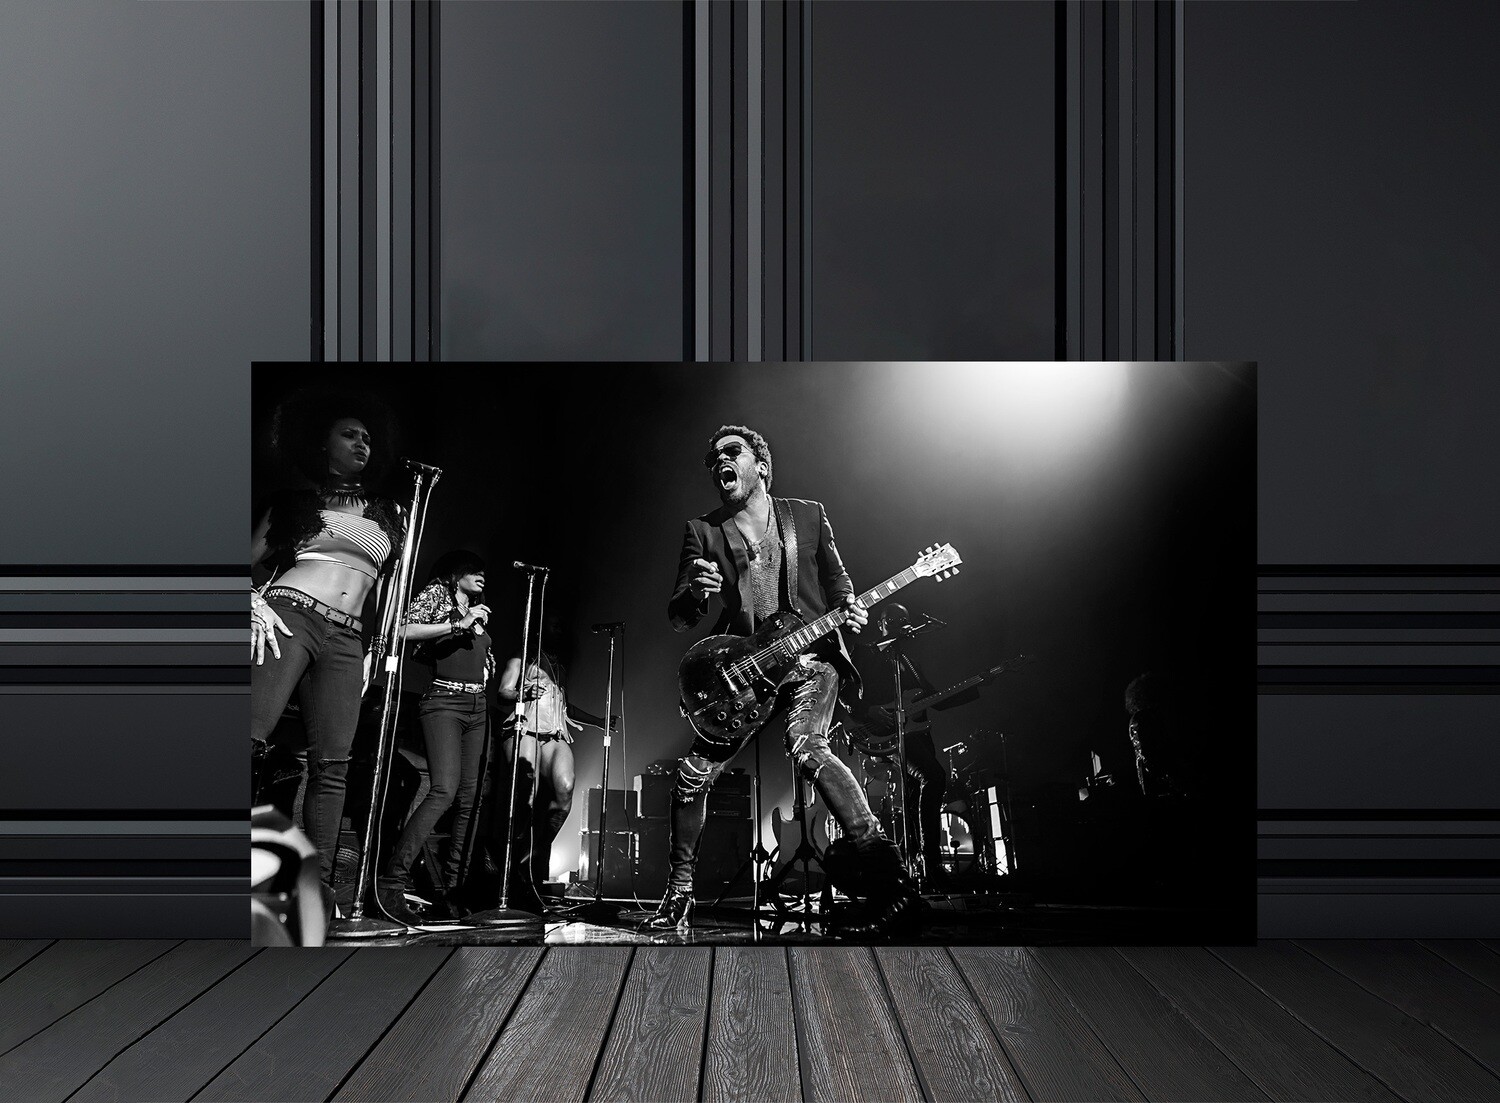 Vente tirage photos de concert Lenny Kravitz - Photo de concert par Eric CANTO